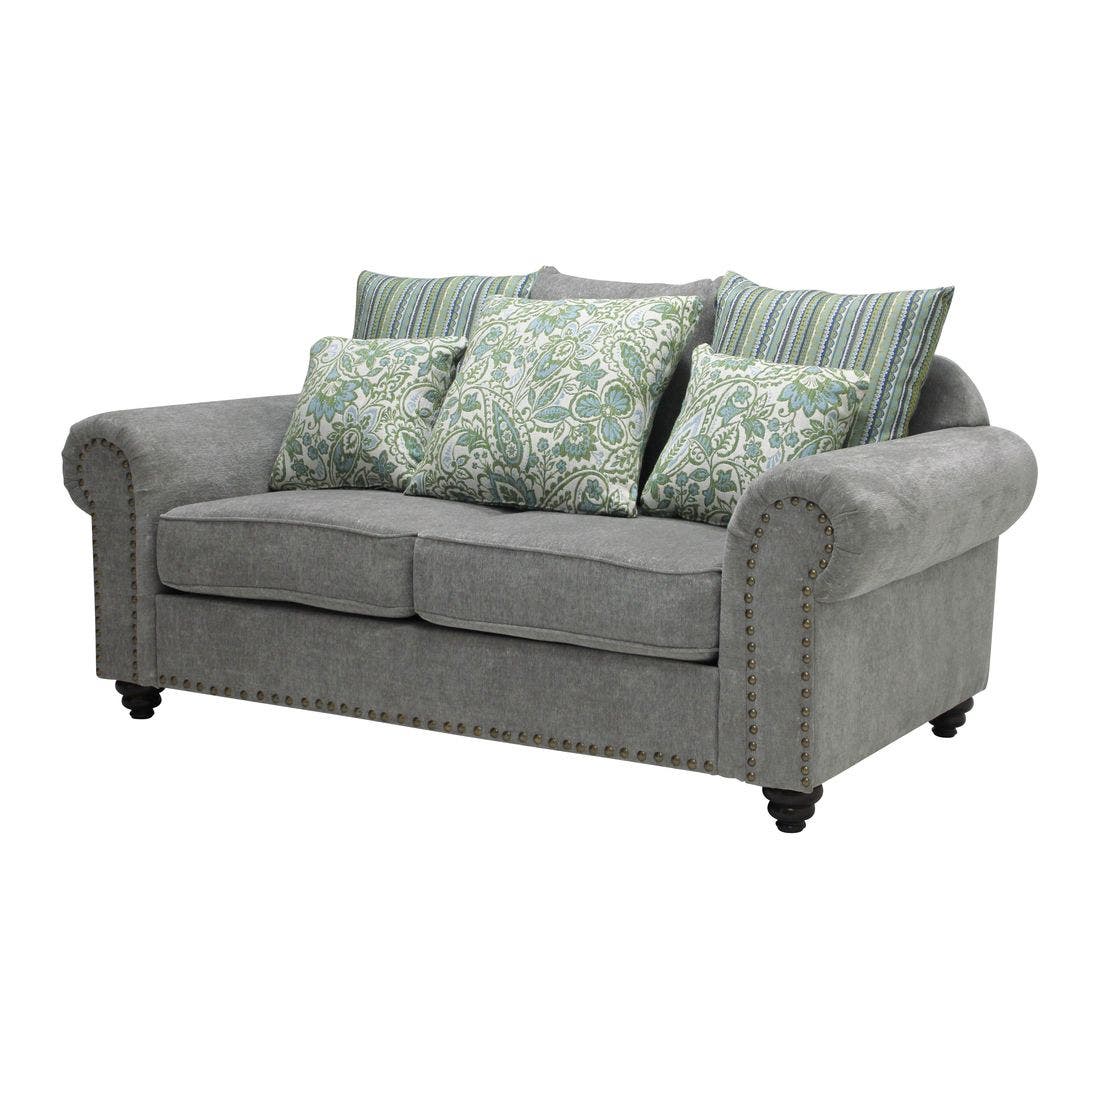 19170437-zolivia-furniture-sofa-recliner-sofas-01